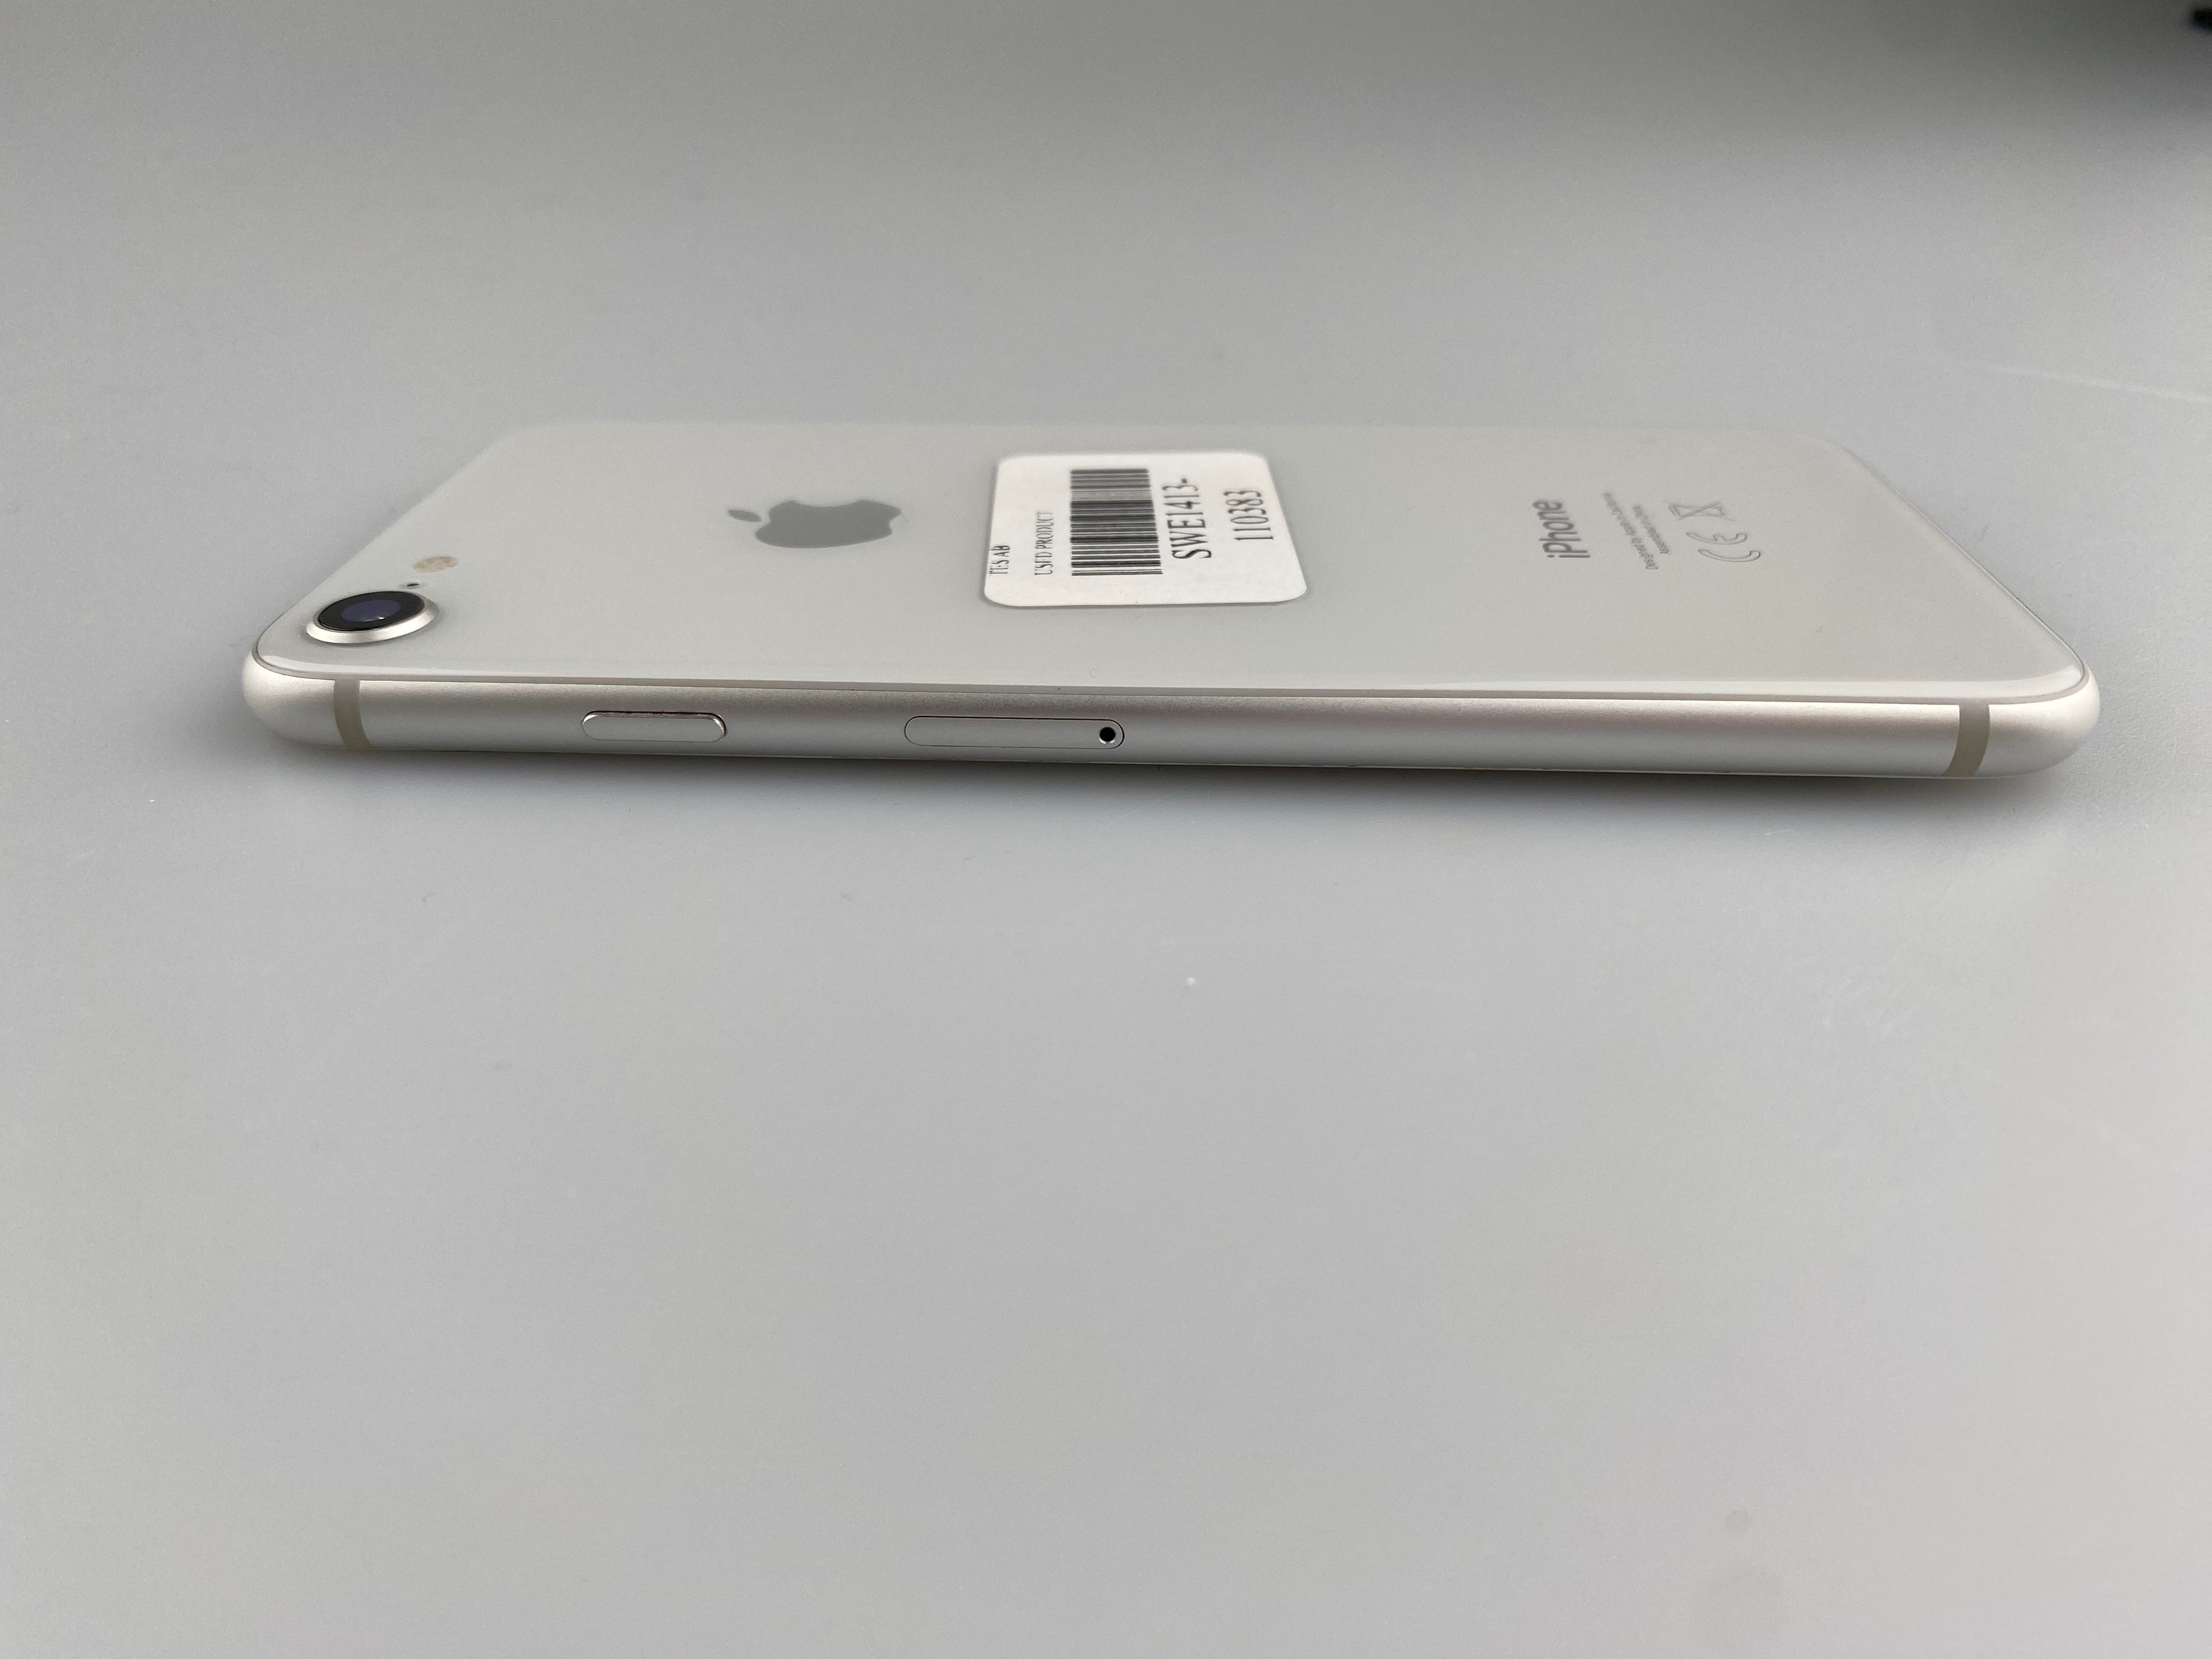 iPhone 8 64GB Silver 2017